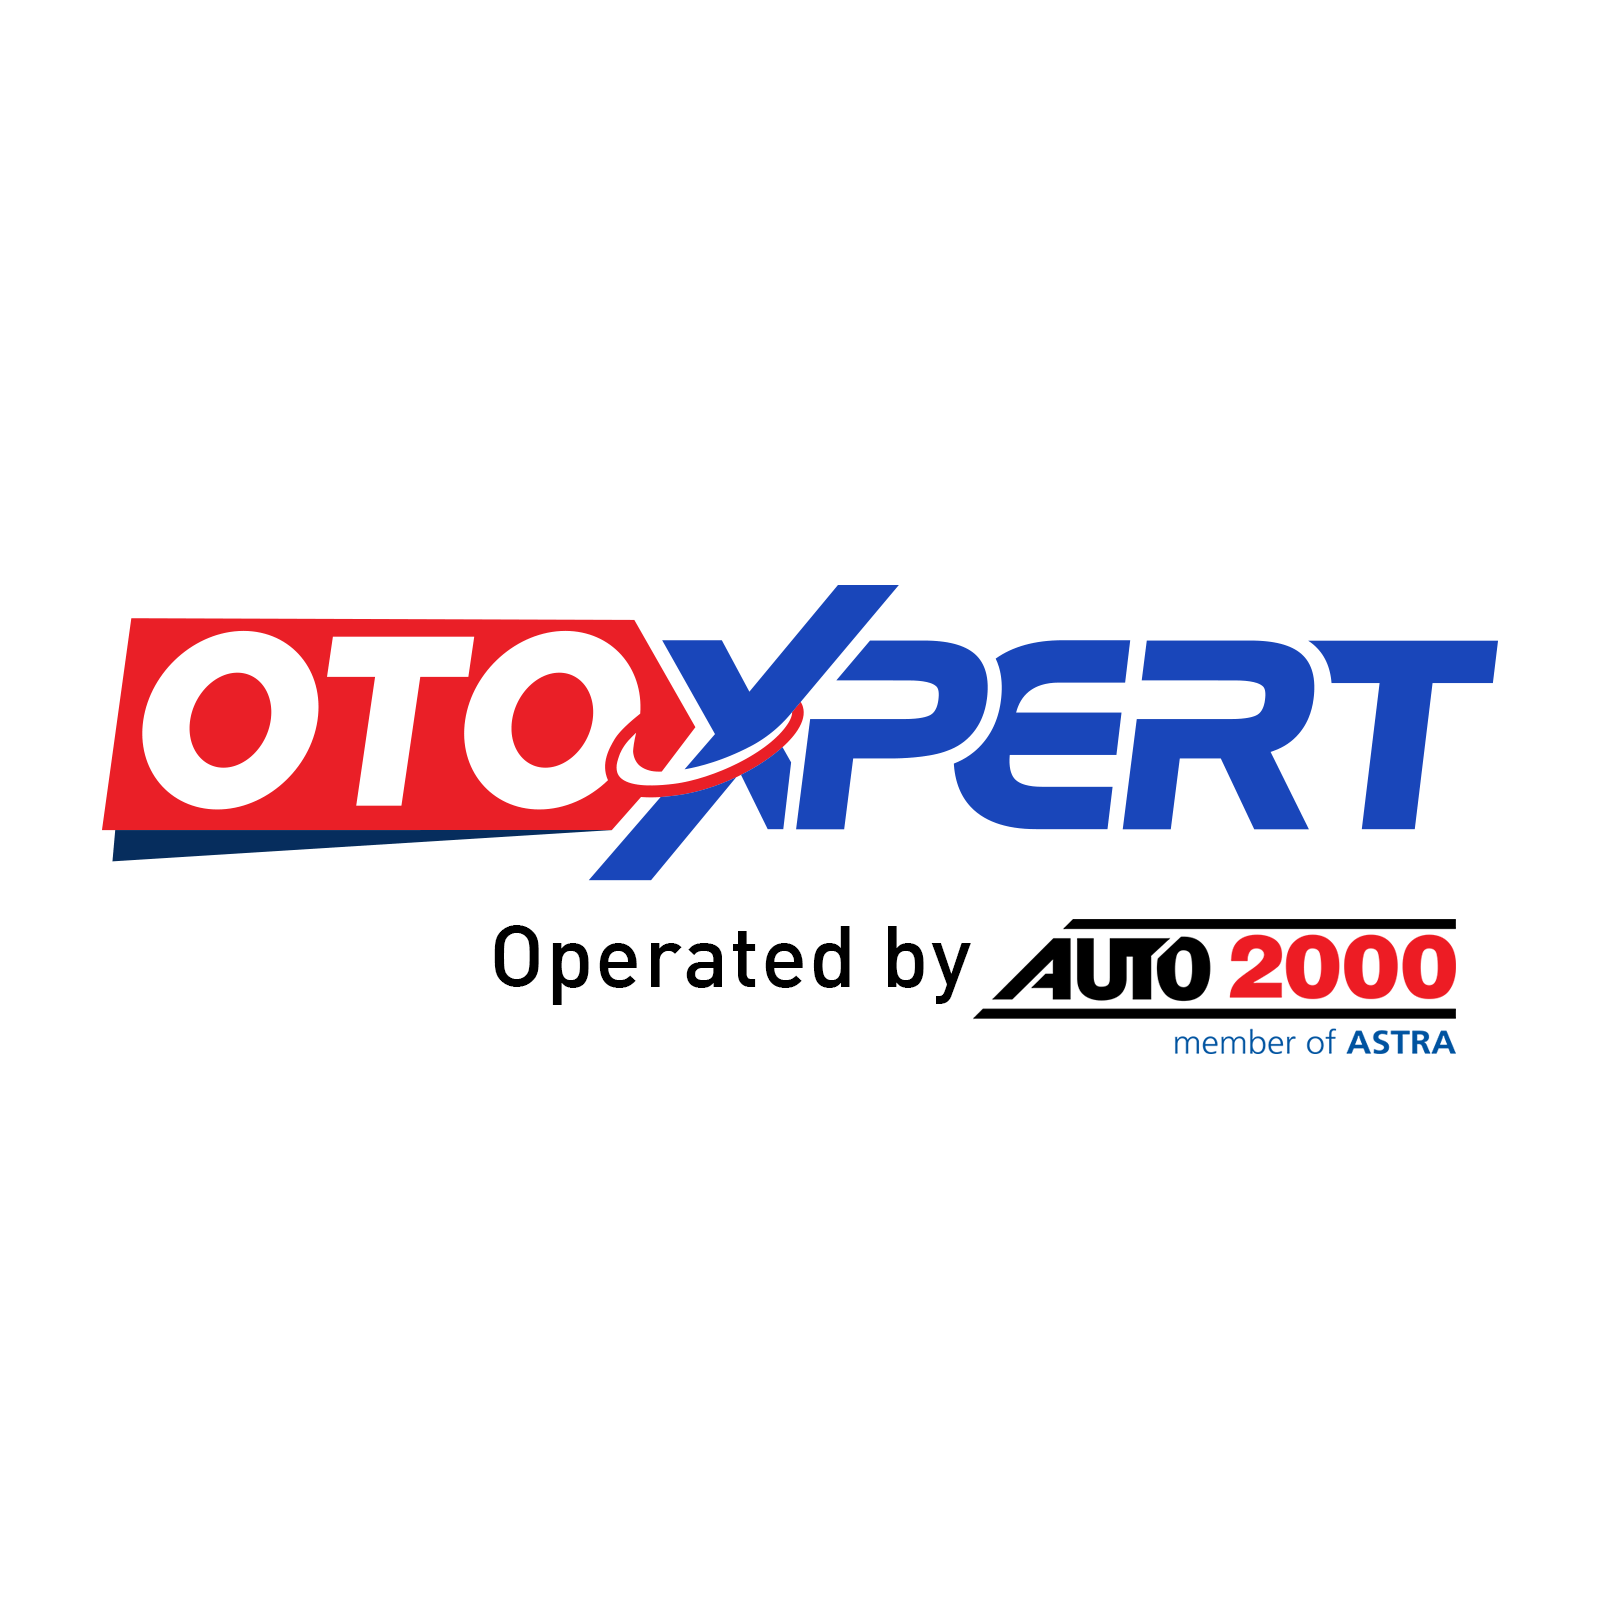 OTOXPERT